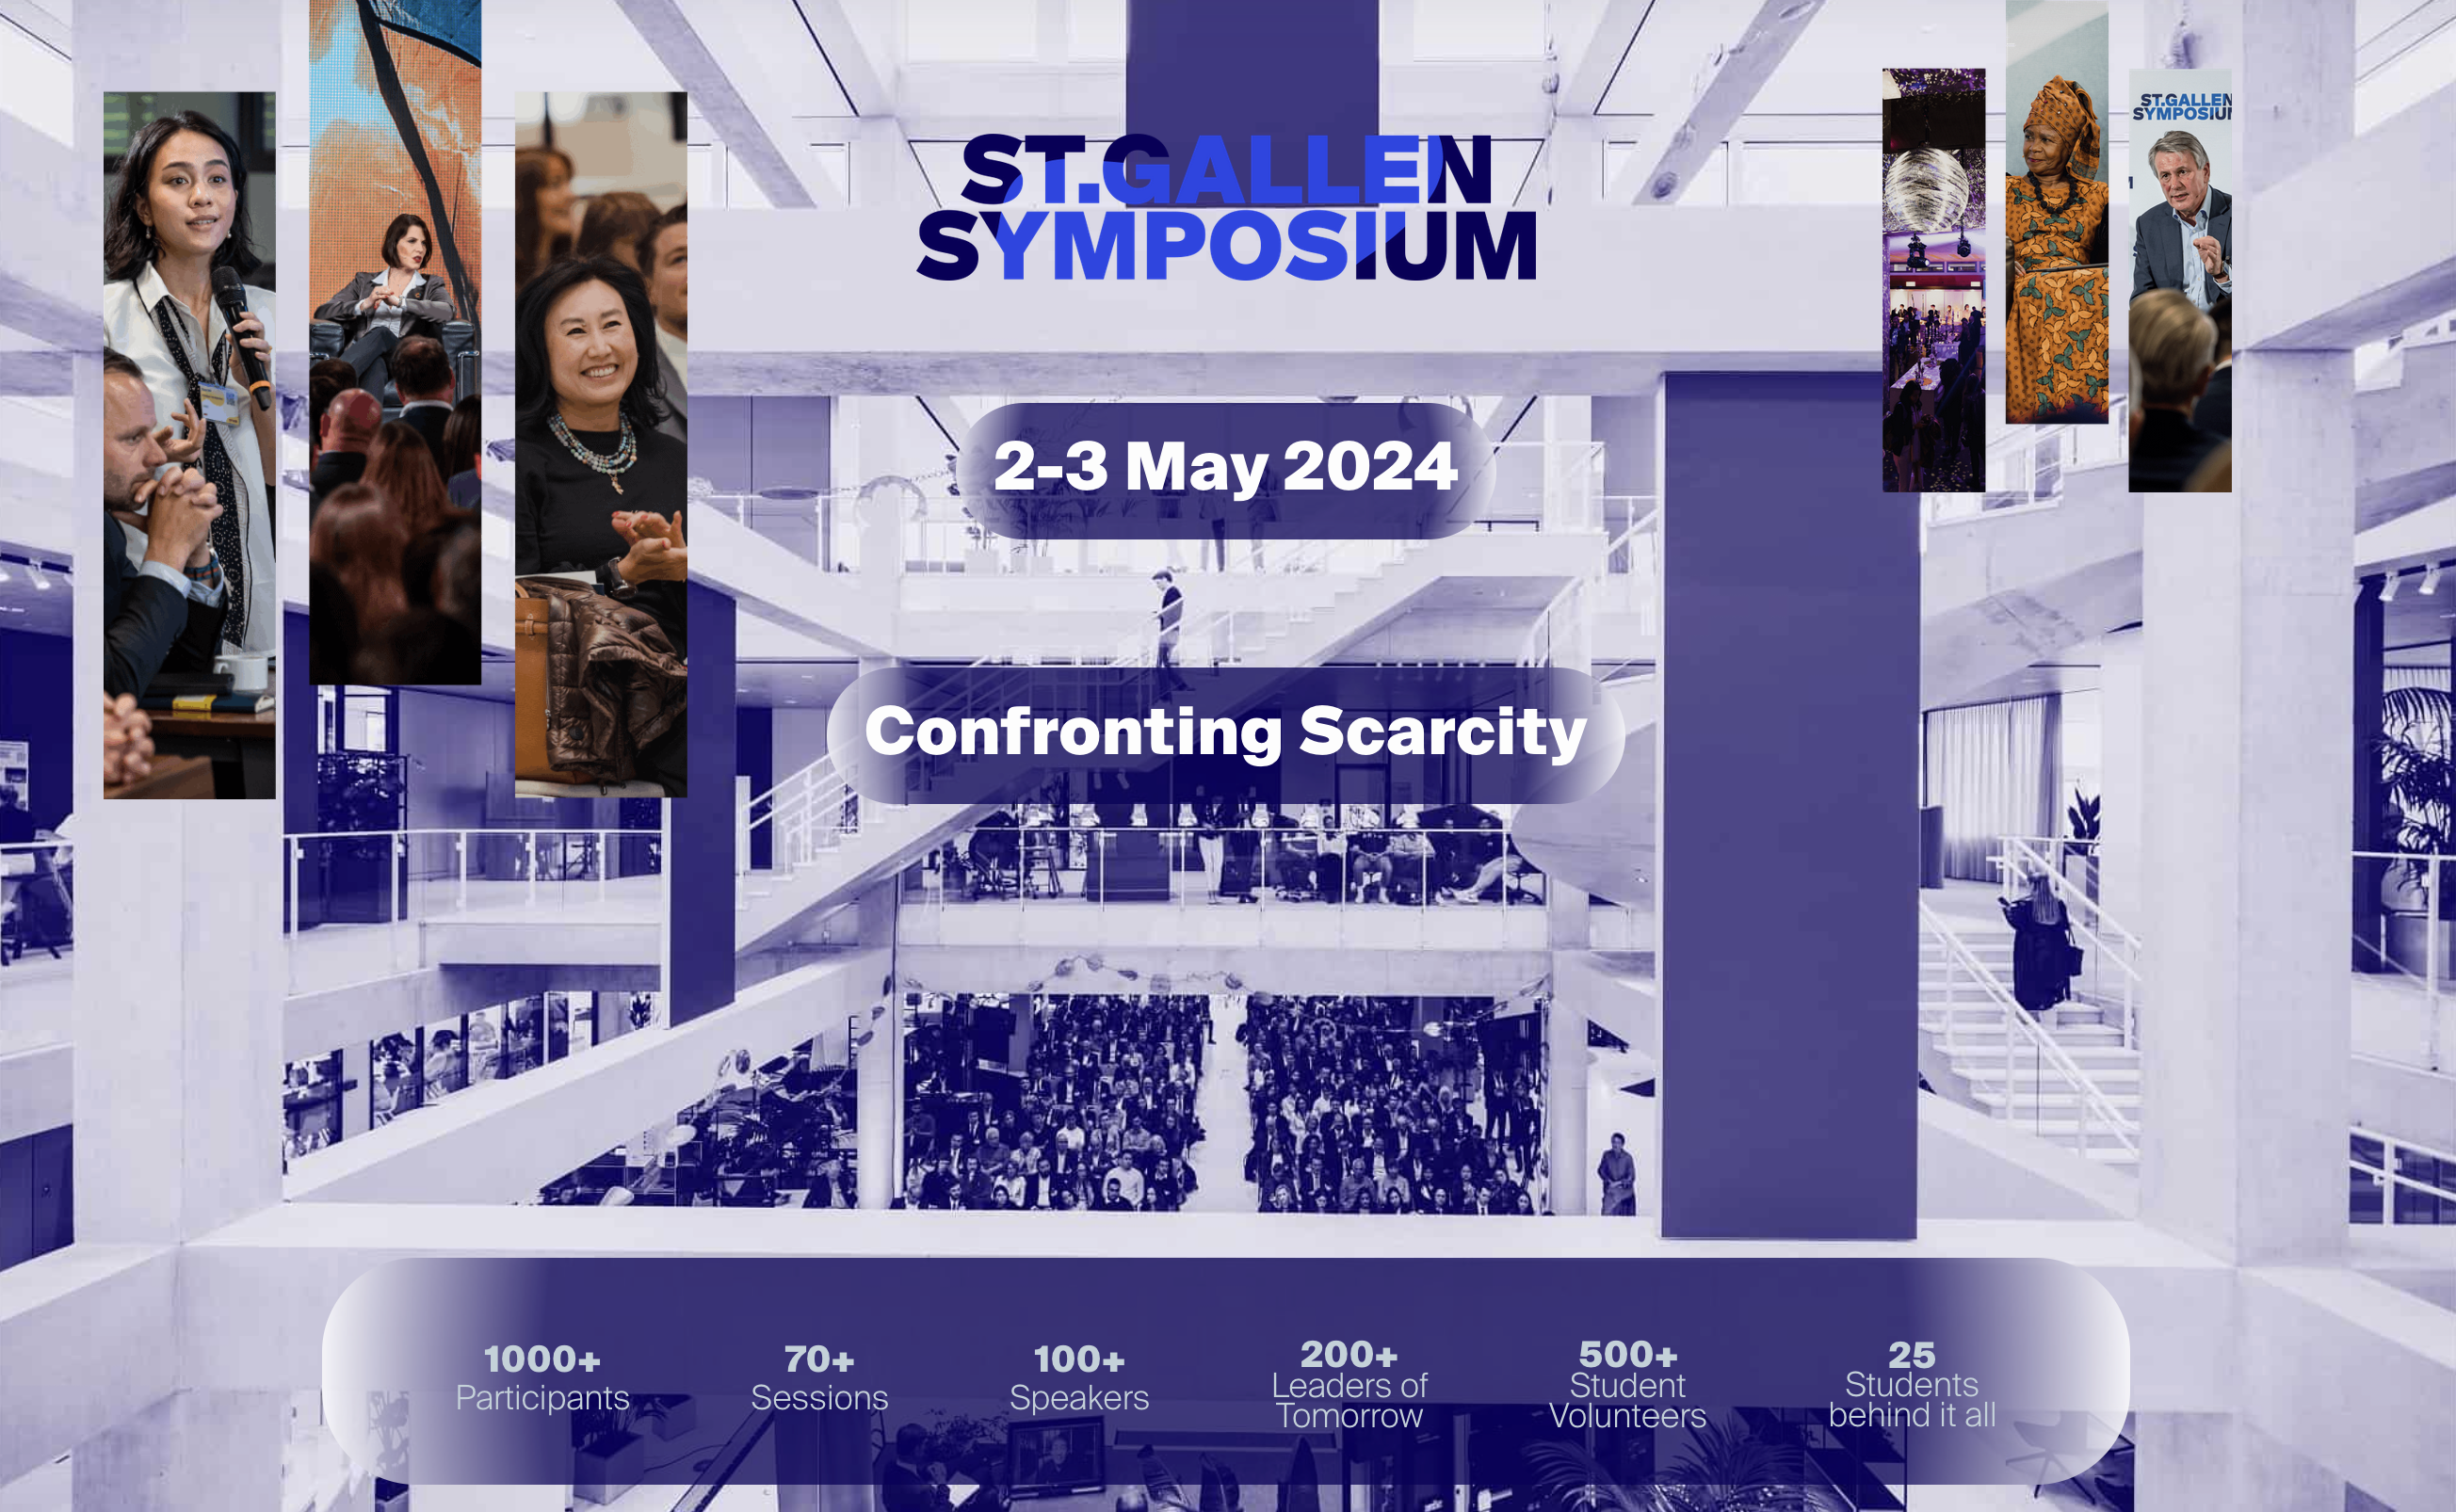 St. Gallen Symposium 2024: Confronting Scarcity